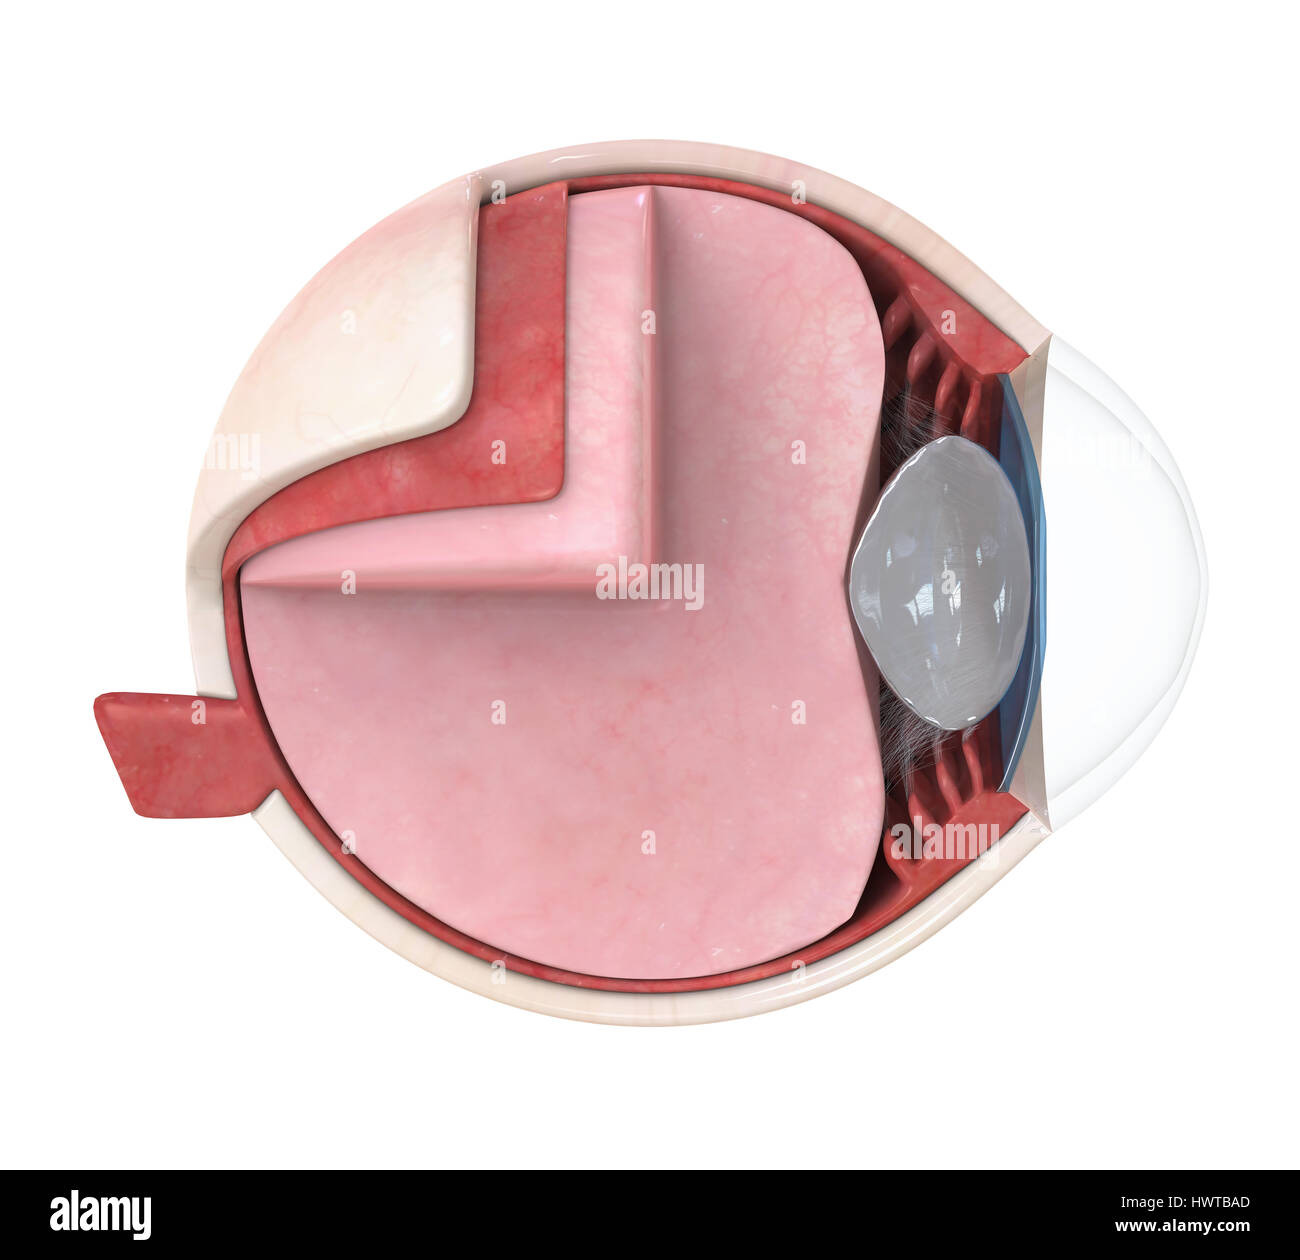 Occhio umano anatomia isolato Foto Stock